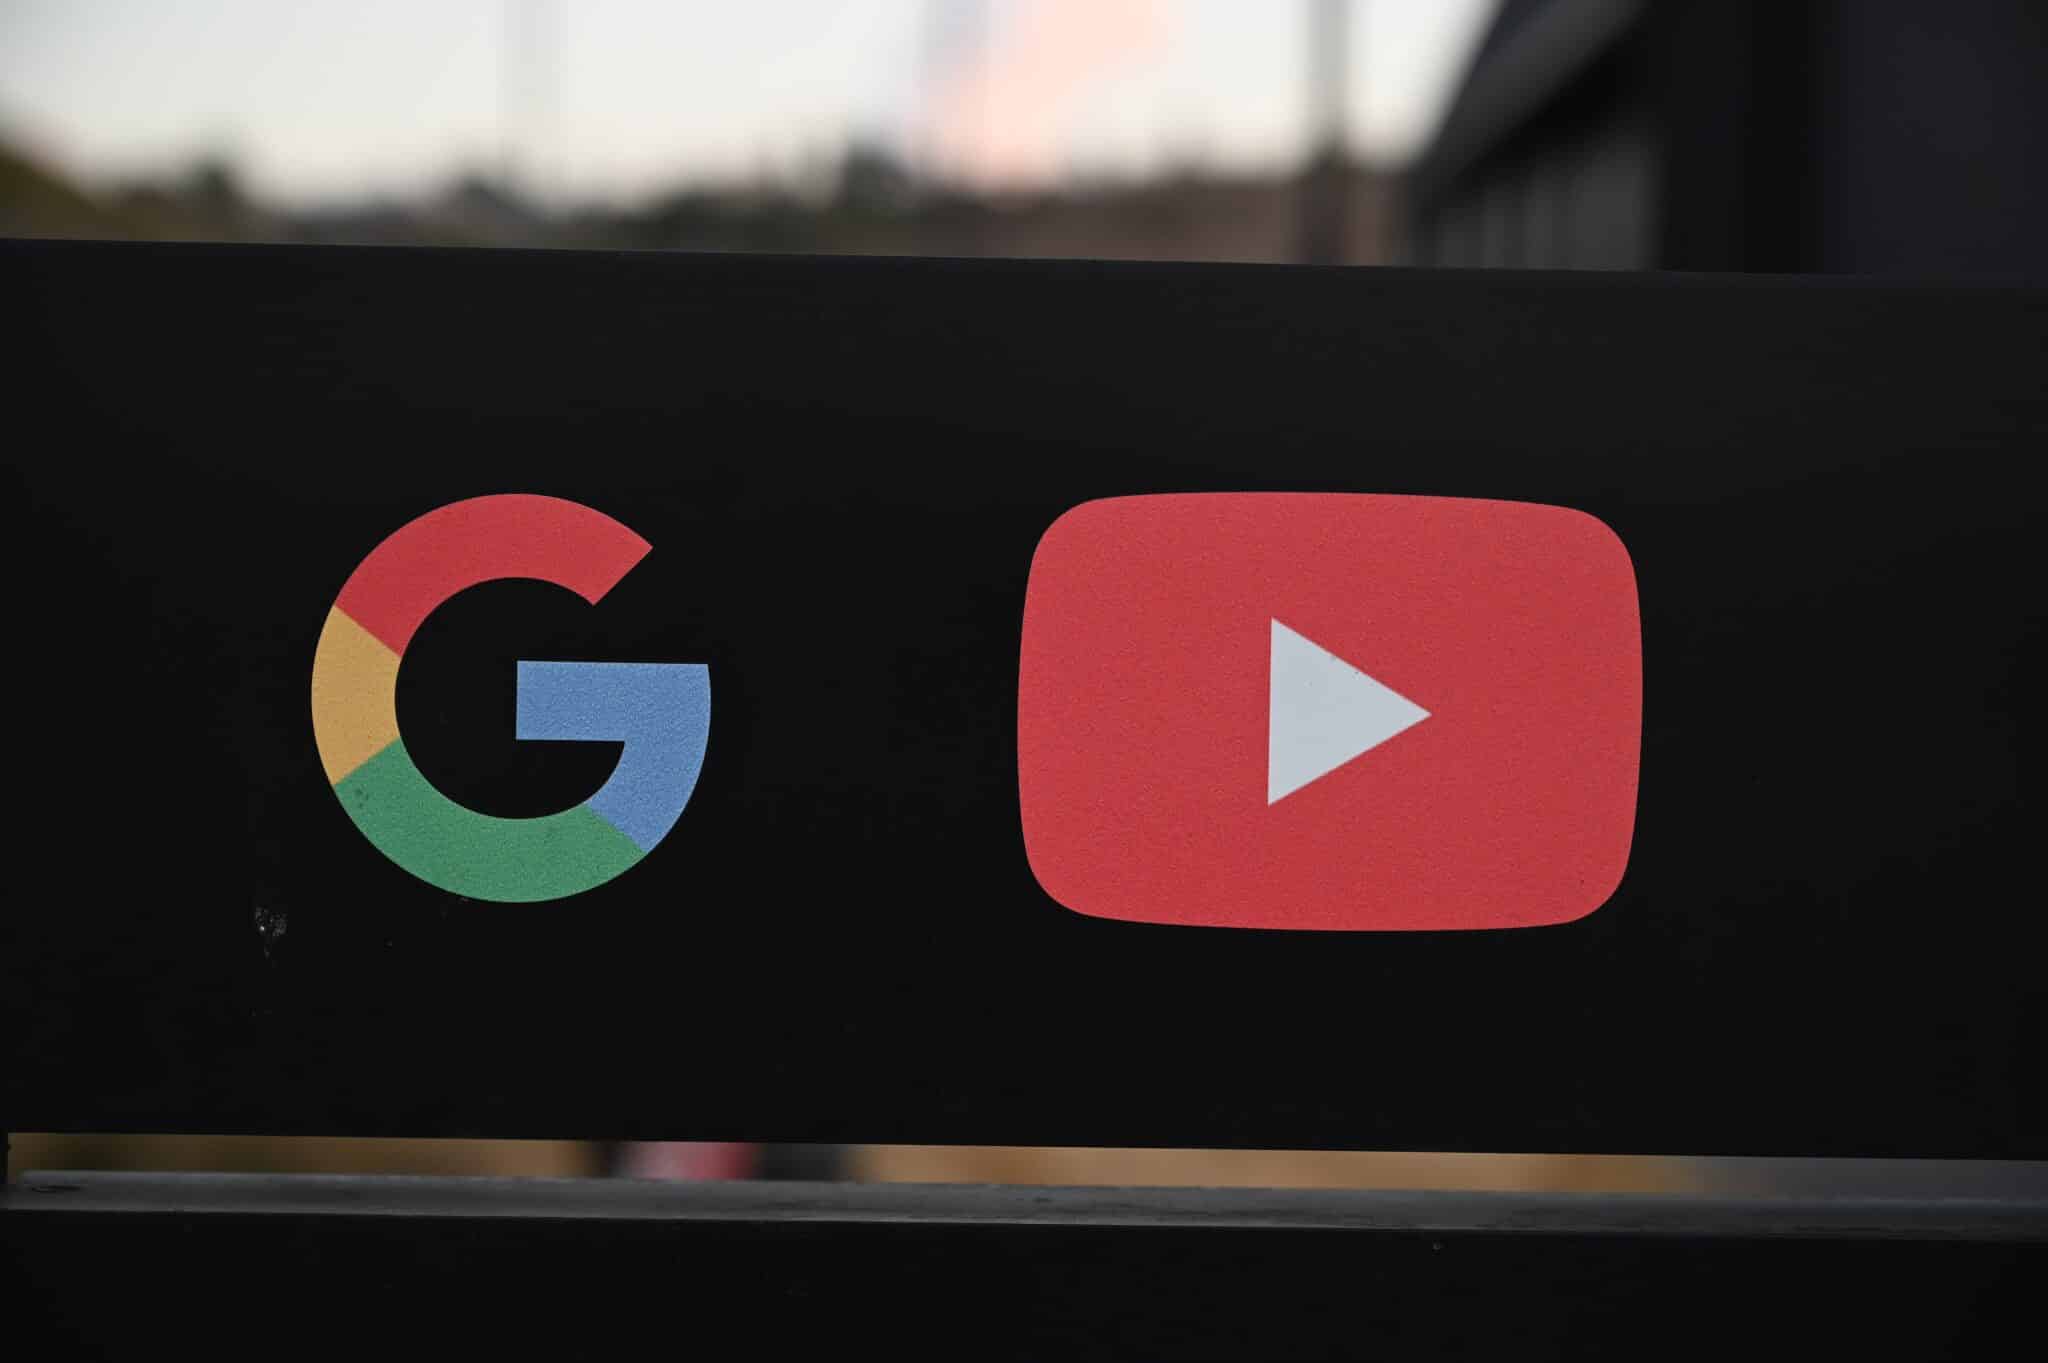 Google and YouTube logos